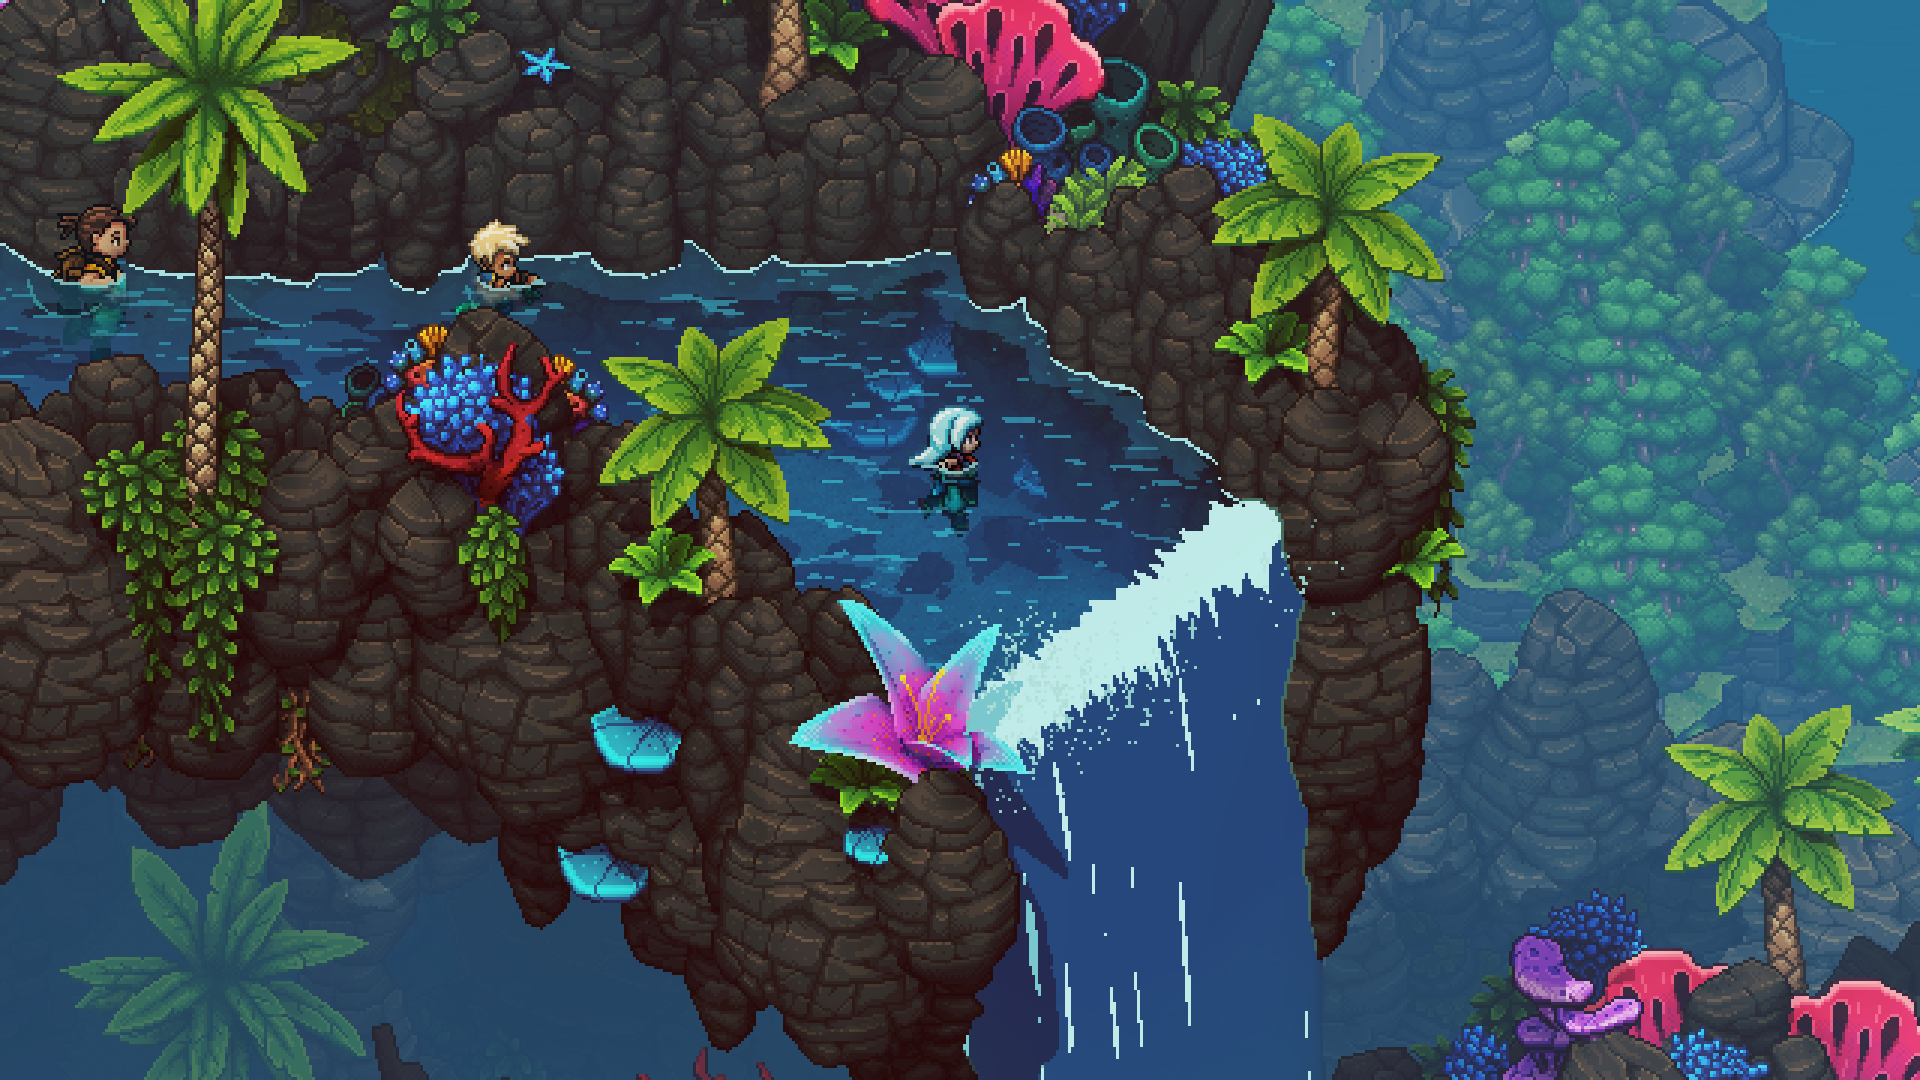 Sea Of Stars Review – A Stellar Pixel Art RPG